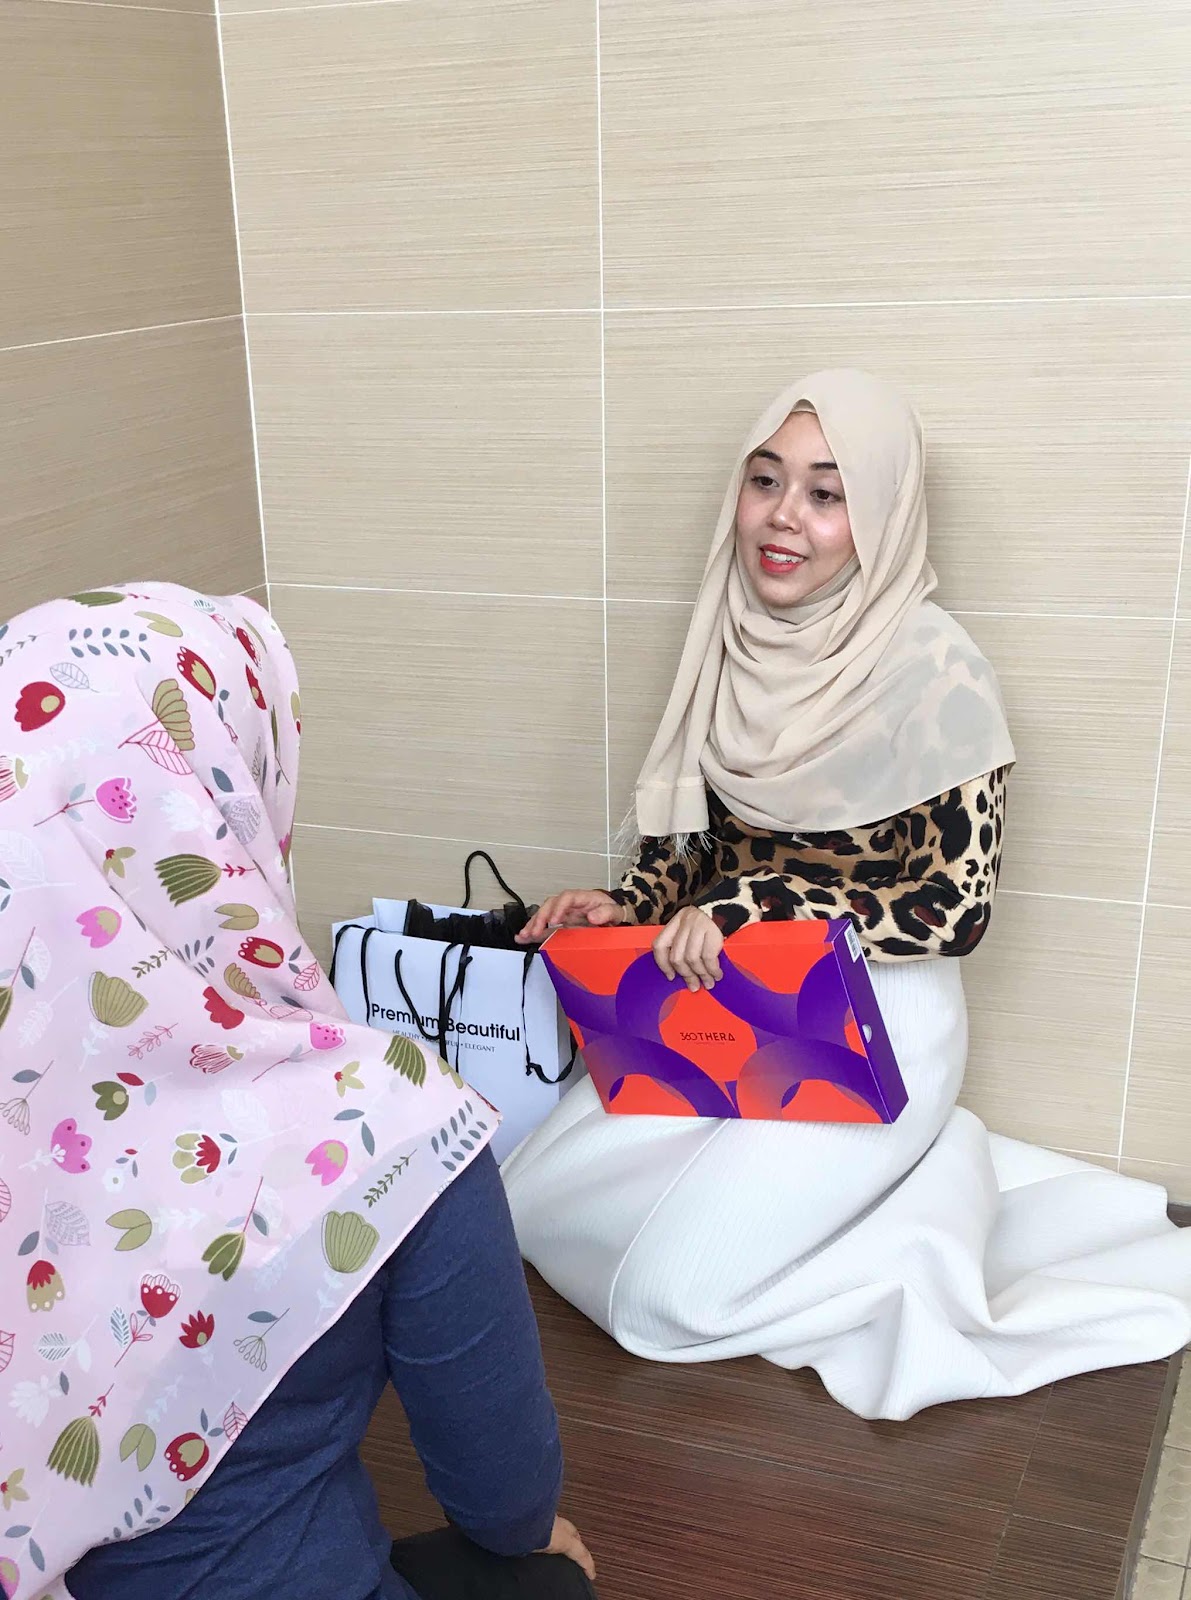 labu sayong Meru AManjaya Perak - tempat makan best di Ipoh - Premium Beautiful Therapants Perak